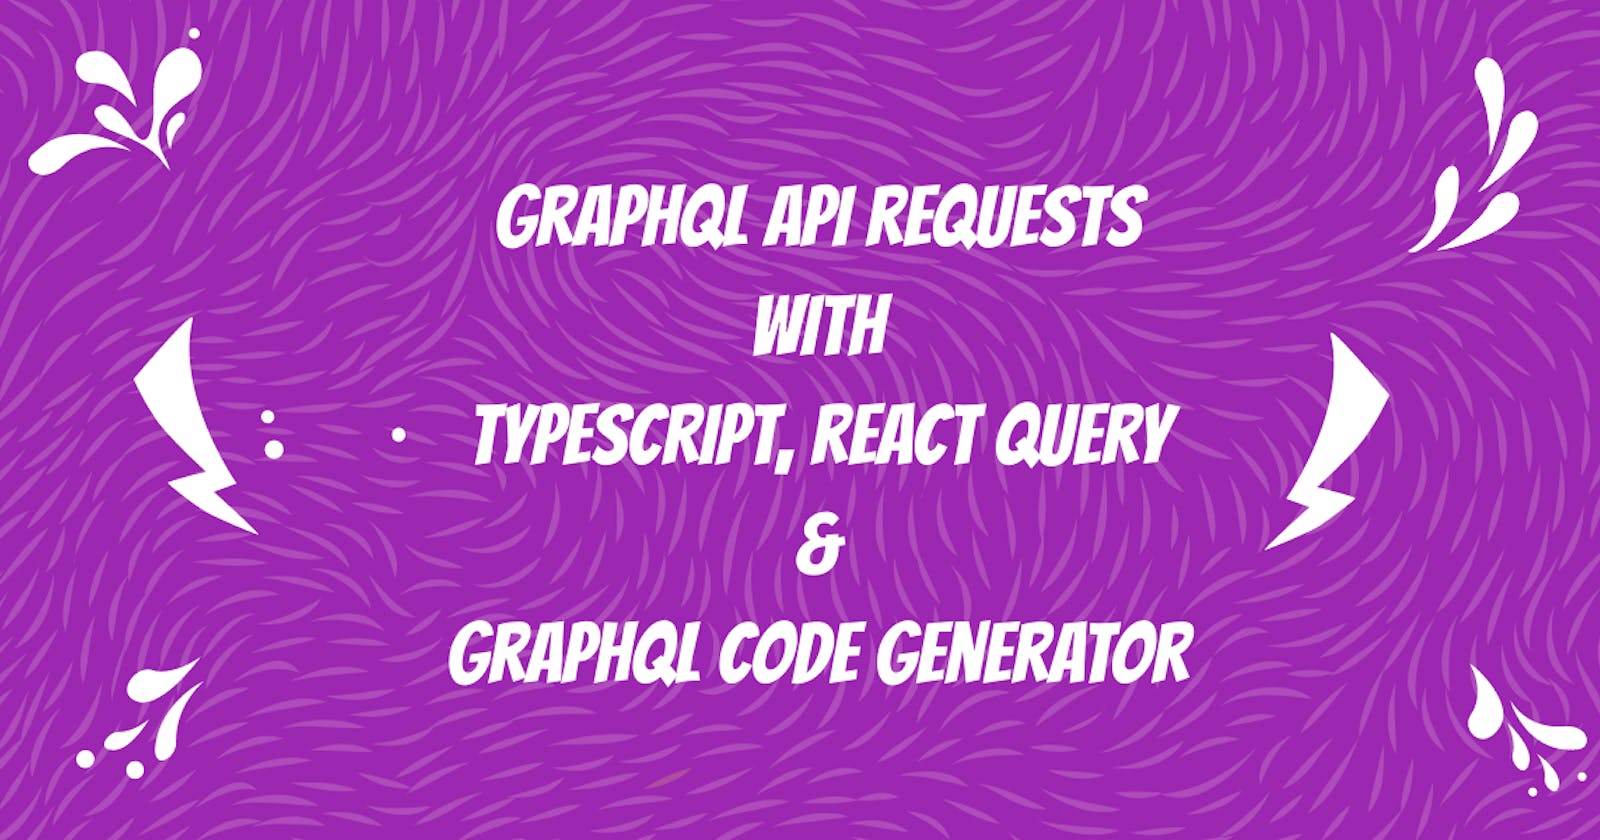 GraphQL API Requests with Typescript, React Query & GraphQL Code Generator